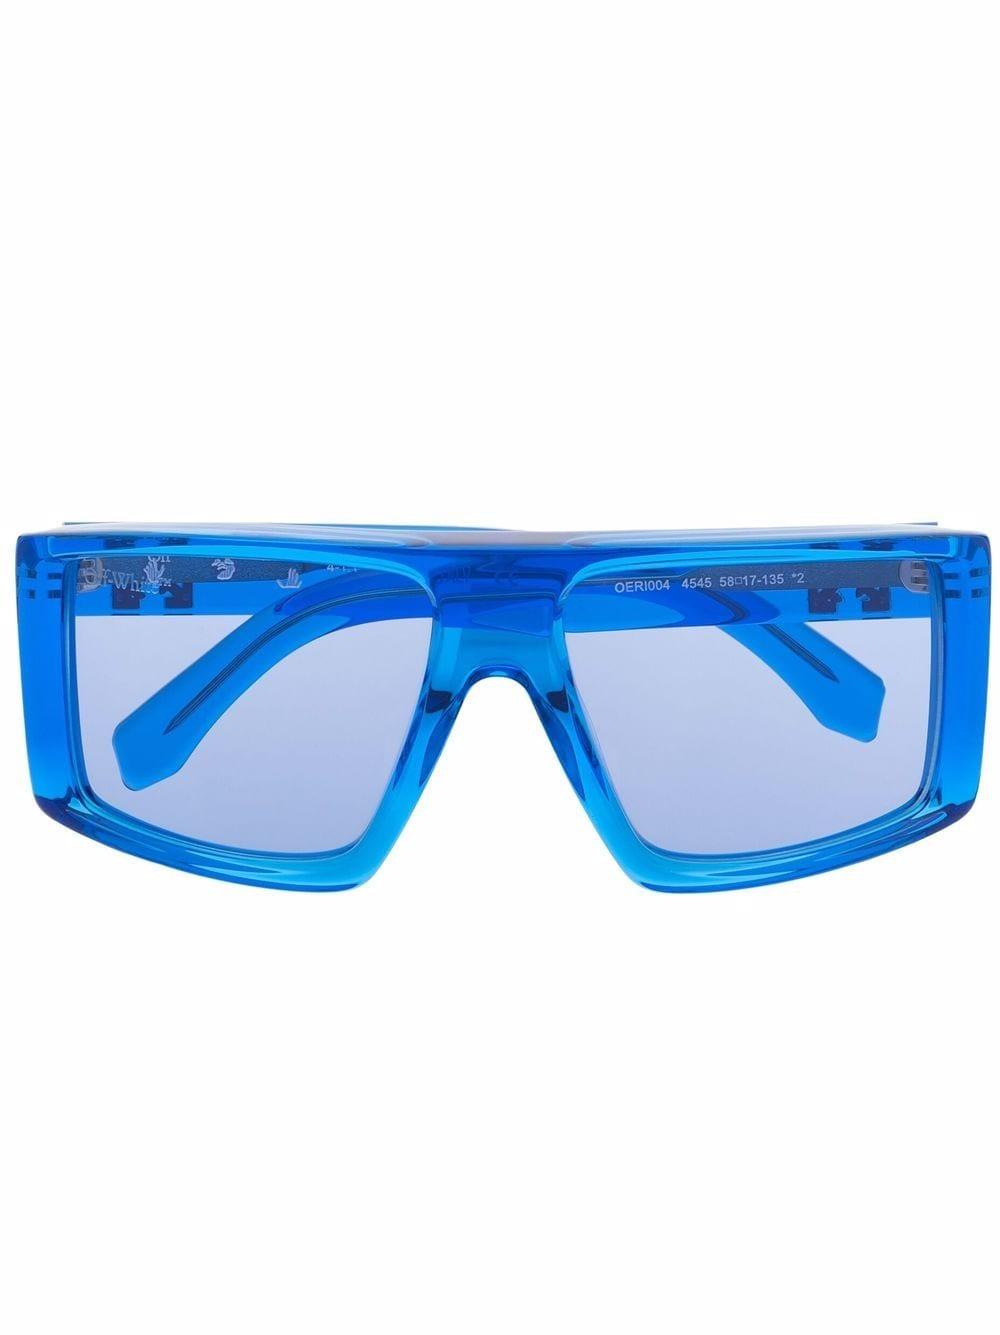 Off-White c/o Virgil Abloh Manchester Sunglasses in Blue